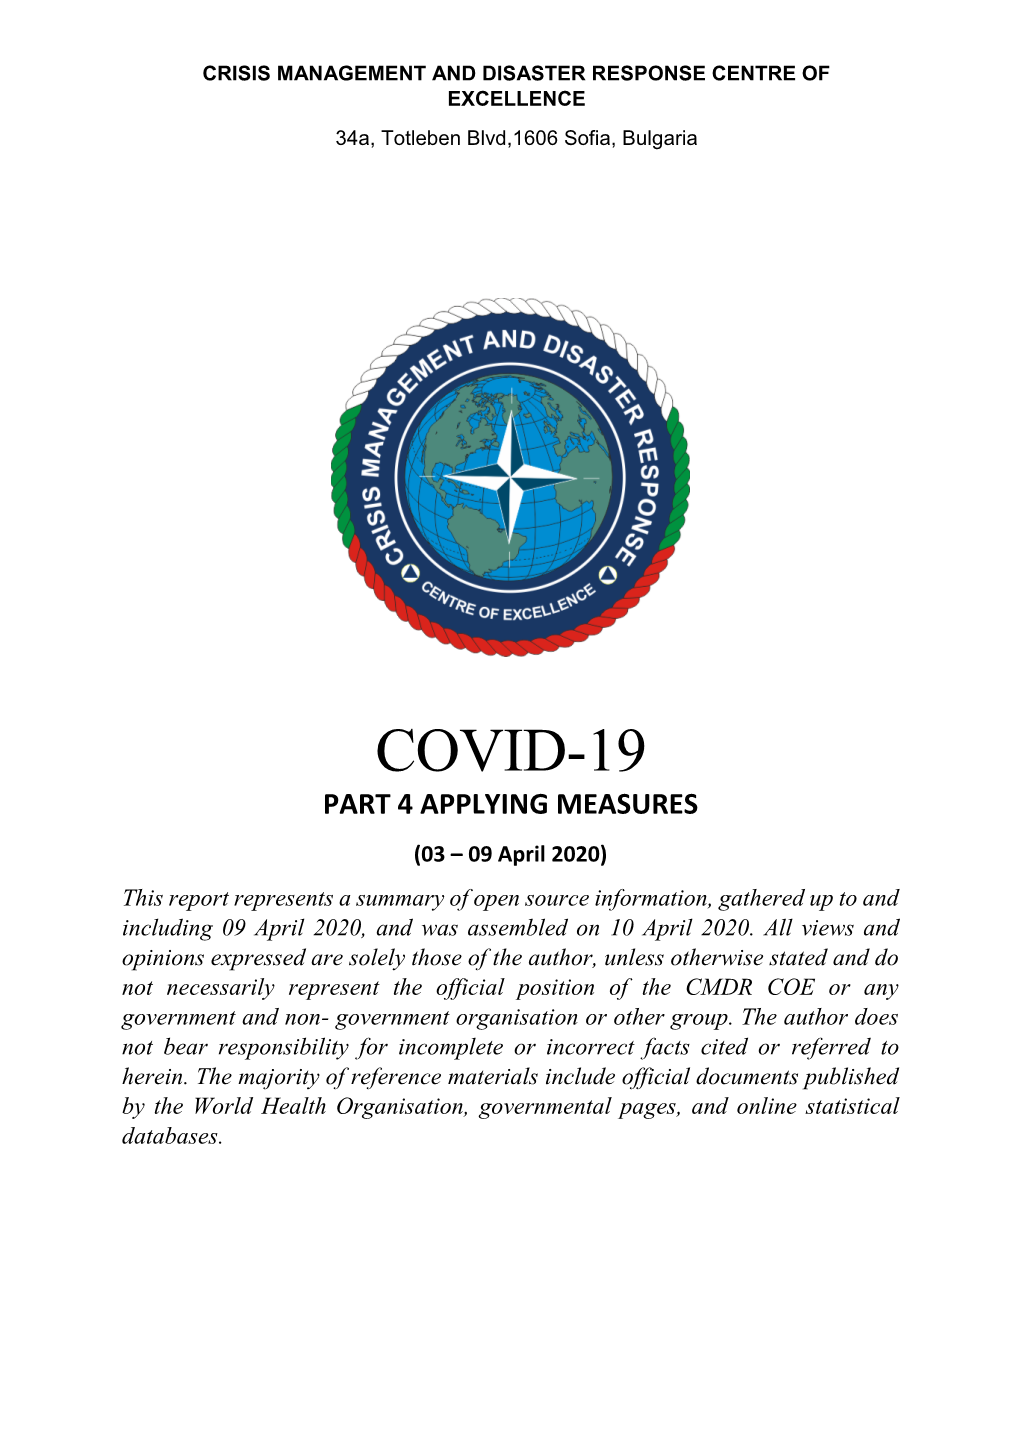 Covid 19 – Part 2